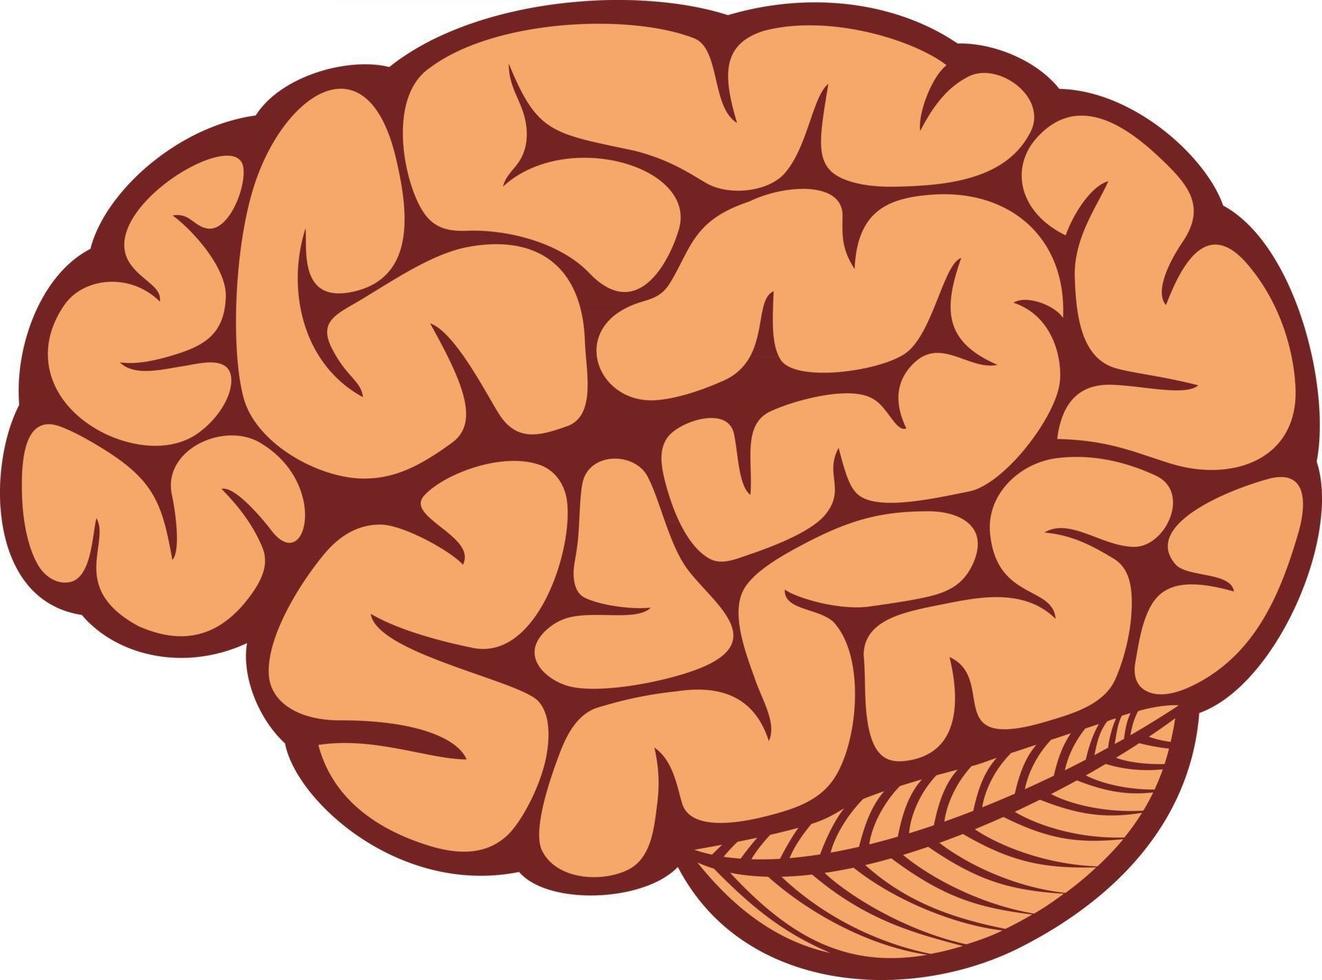 O cérebro humano vetor